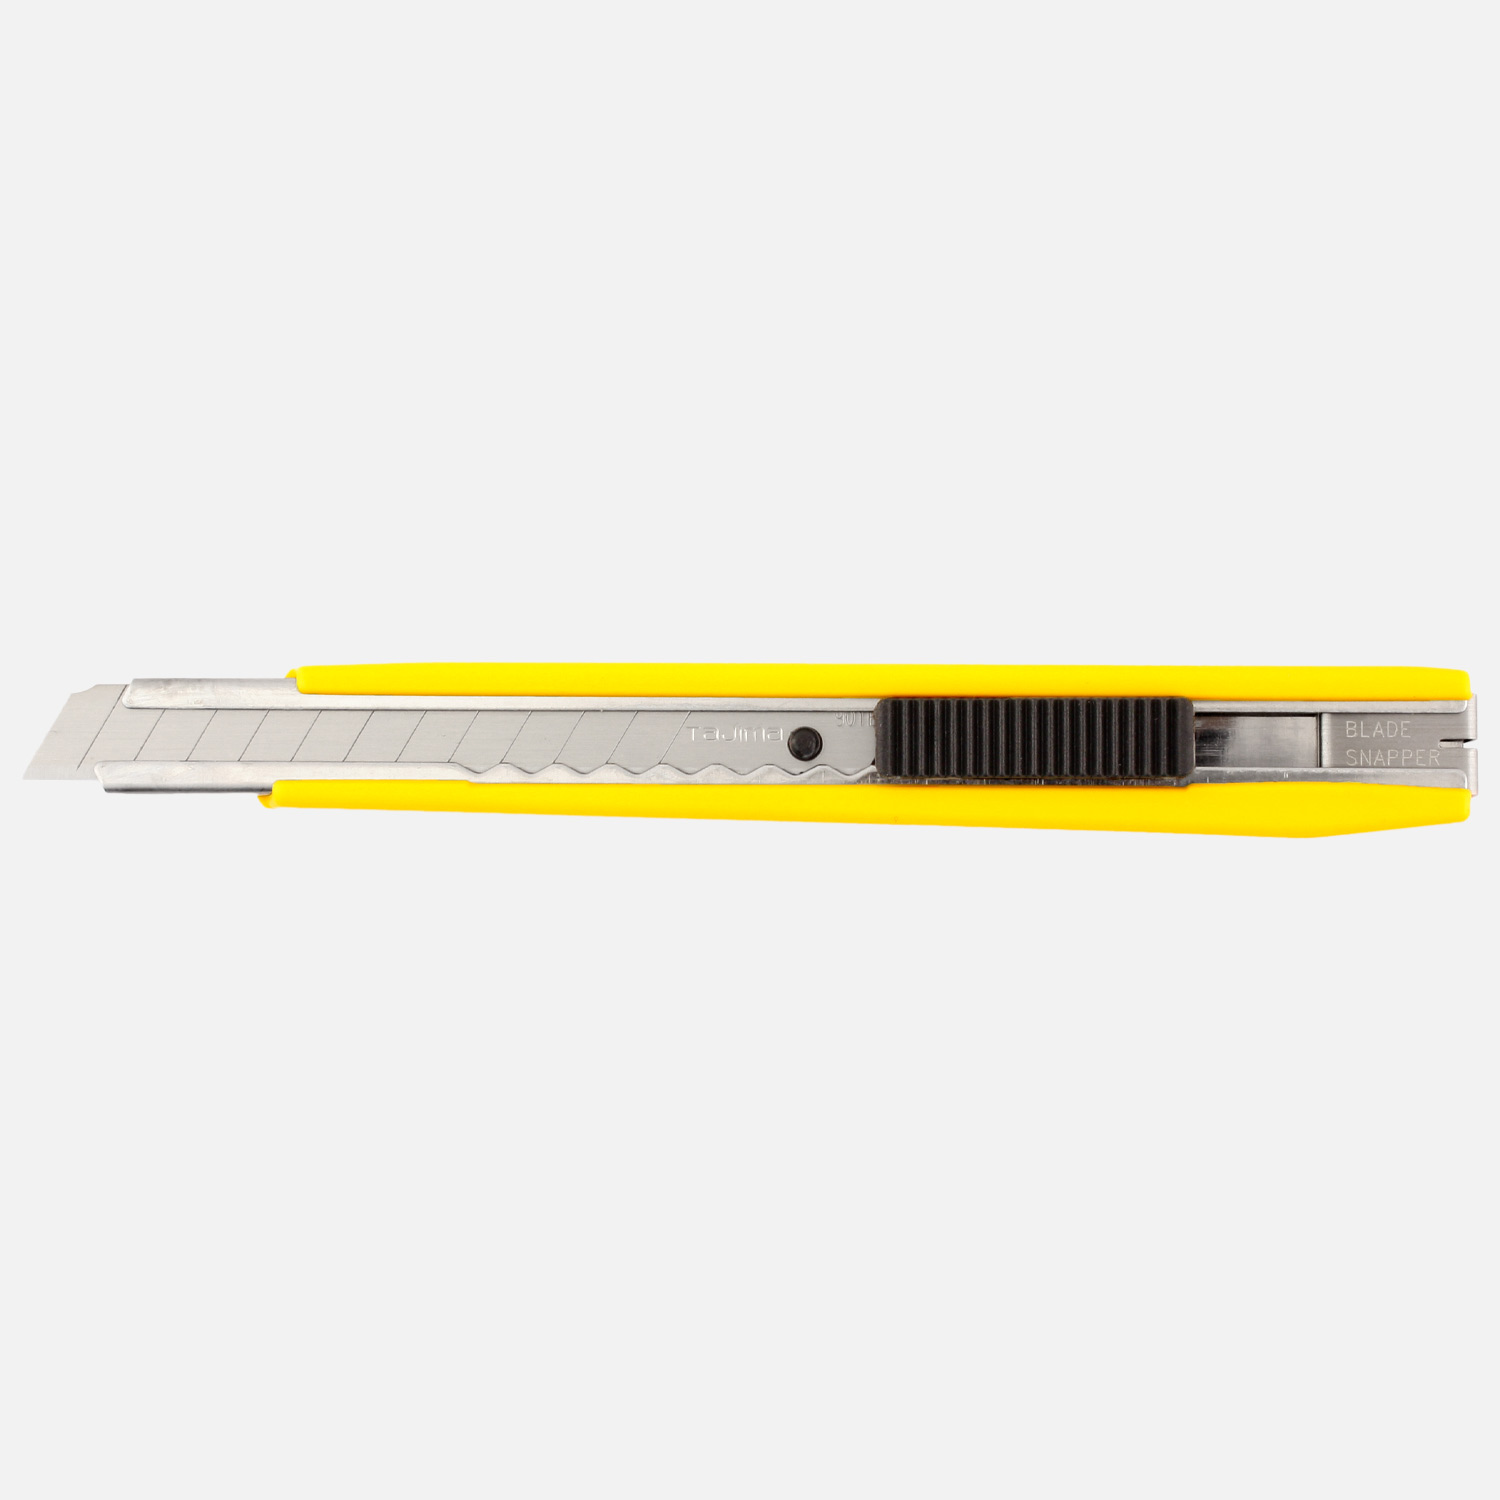 1 Cuttermesser mit 9mm Klingenbreite - Tajima